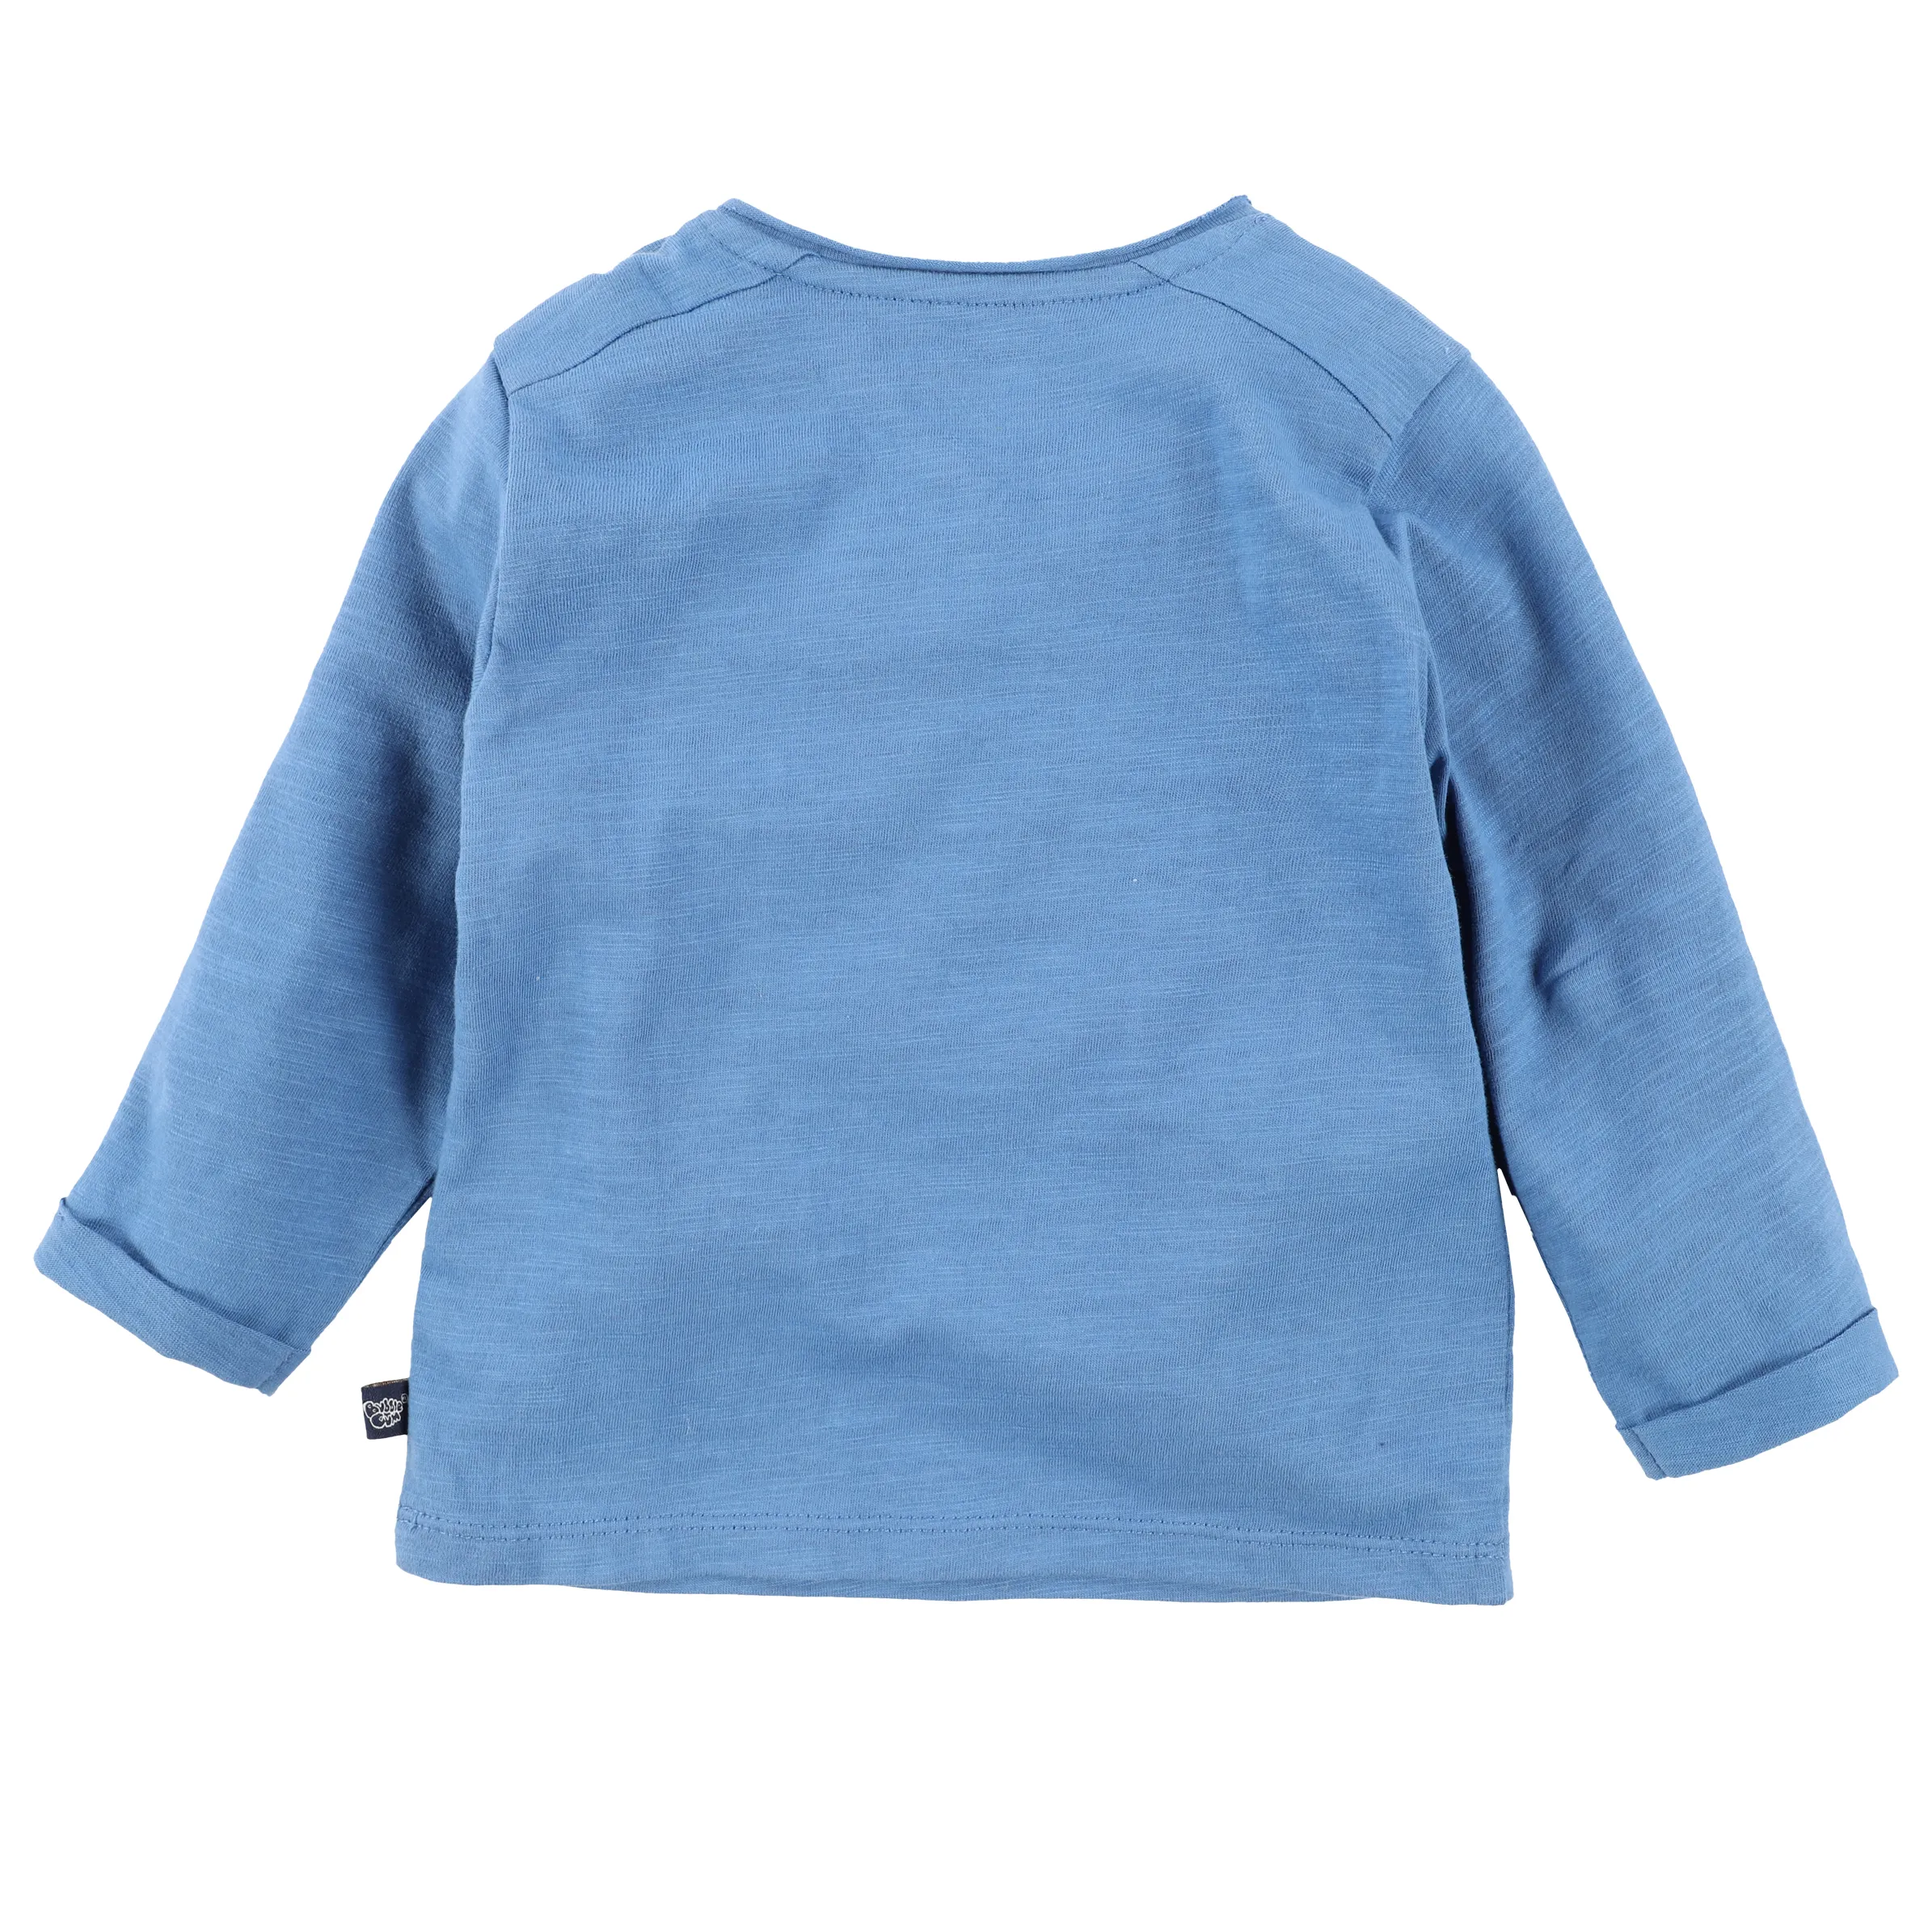 Bubble Gum BJ Longsleeve Shirt in blau mit Waldtierdruck Blau 884314 BLAU 2